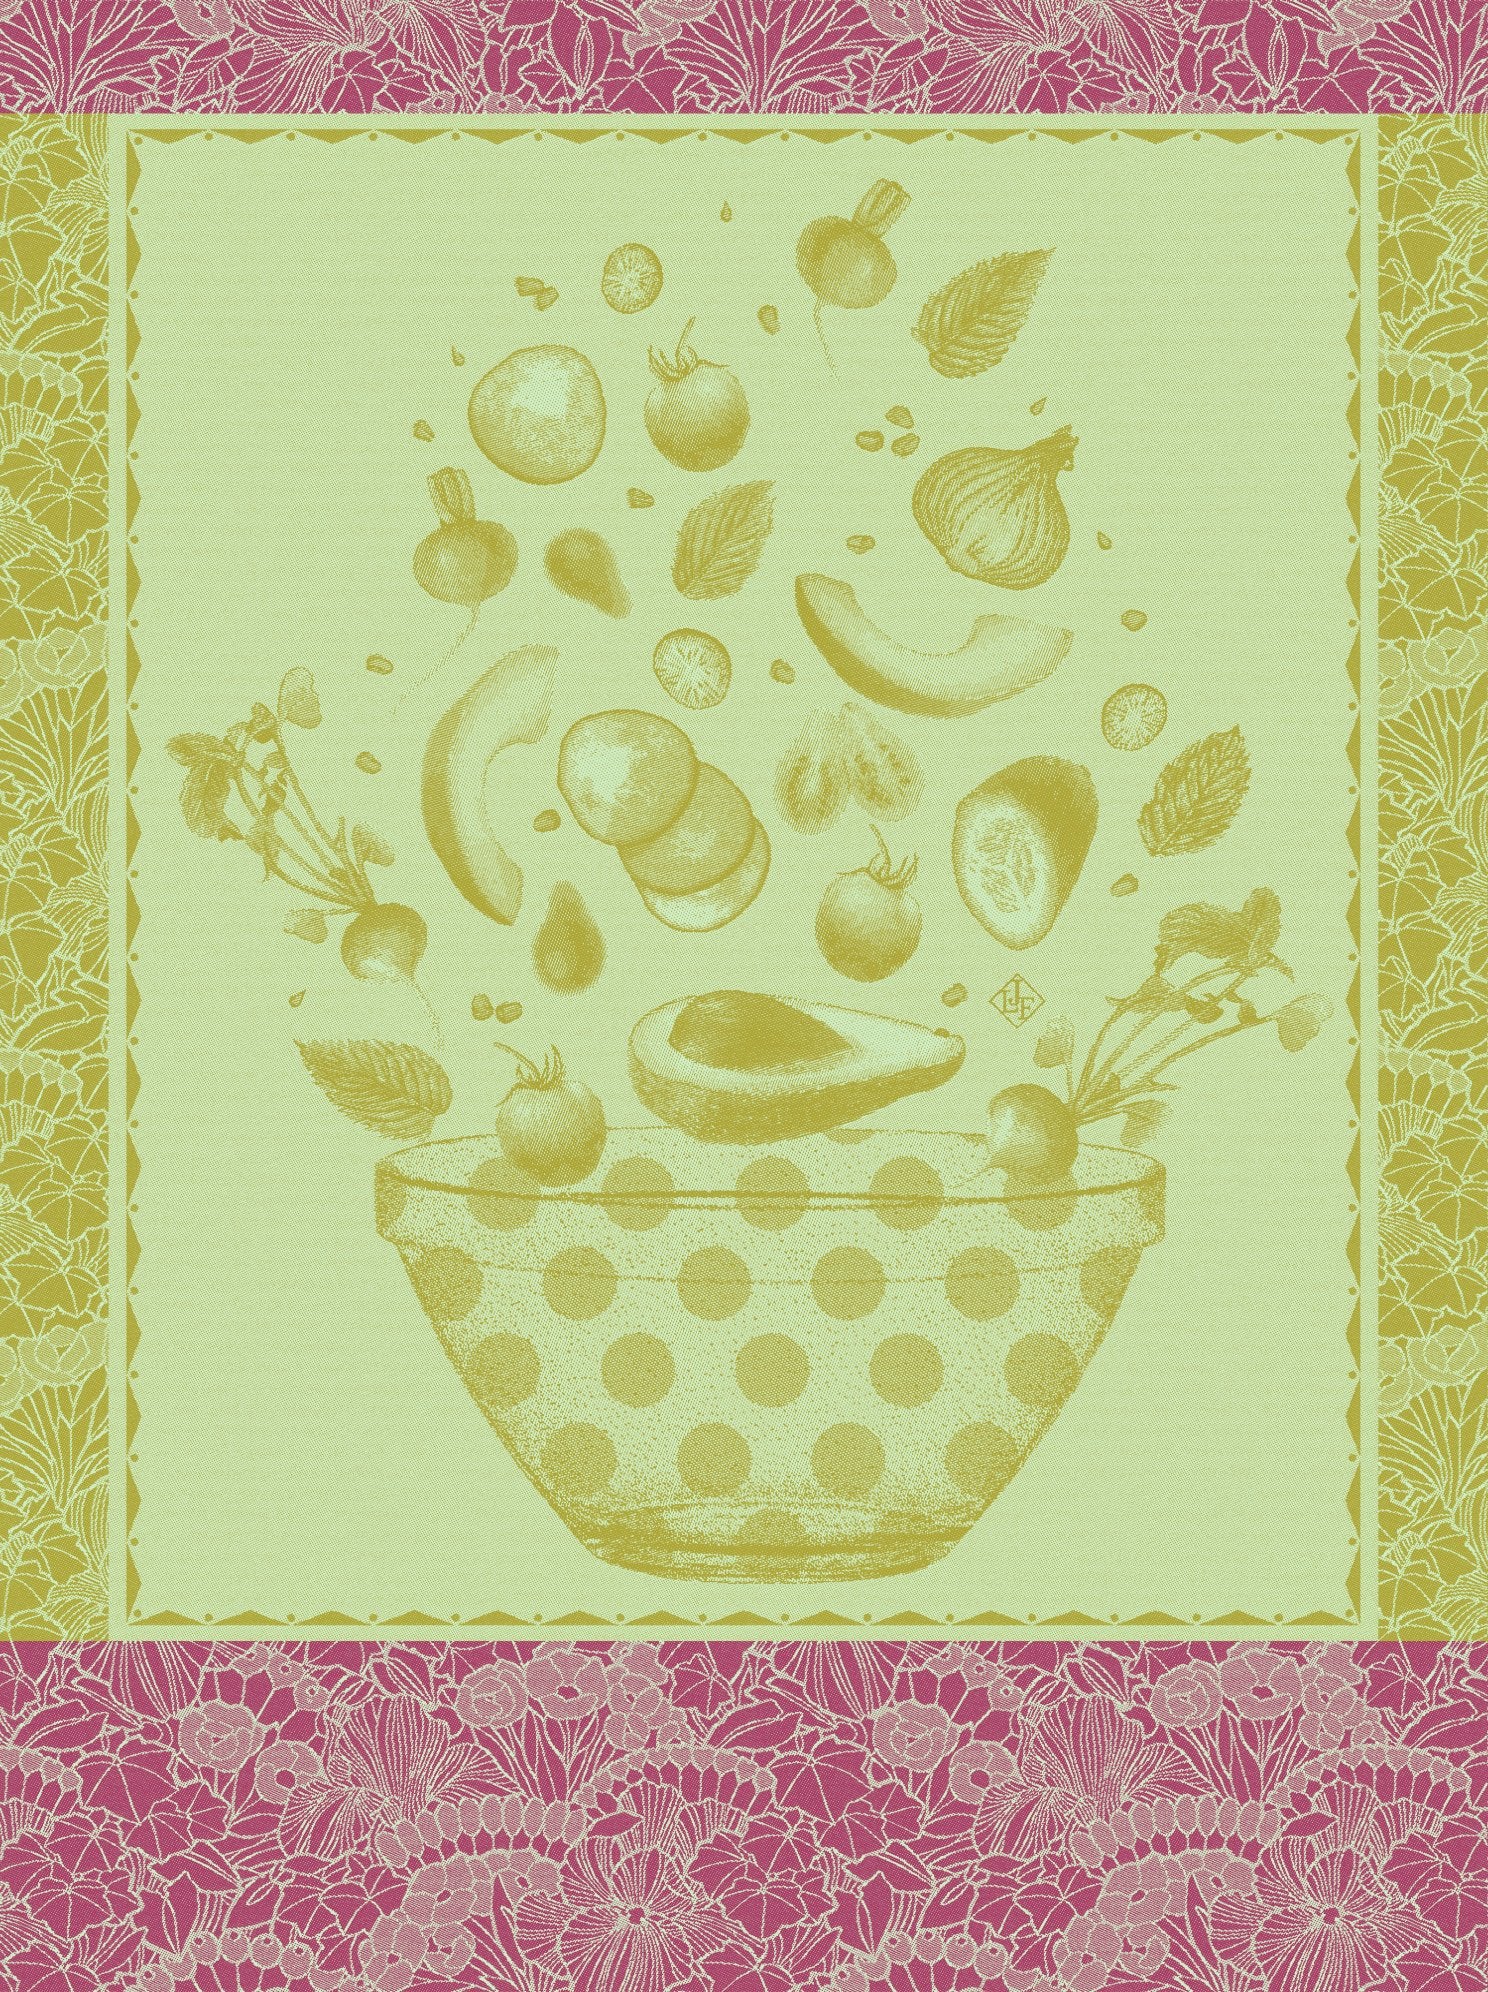 Jacquard Francais "Salade d’Ete" (Green), Woven cotton tea towel. Made in France.